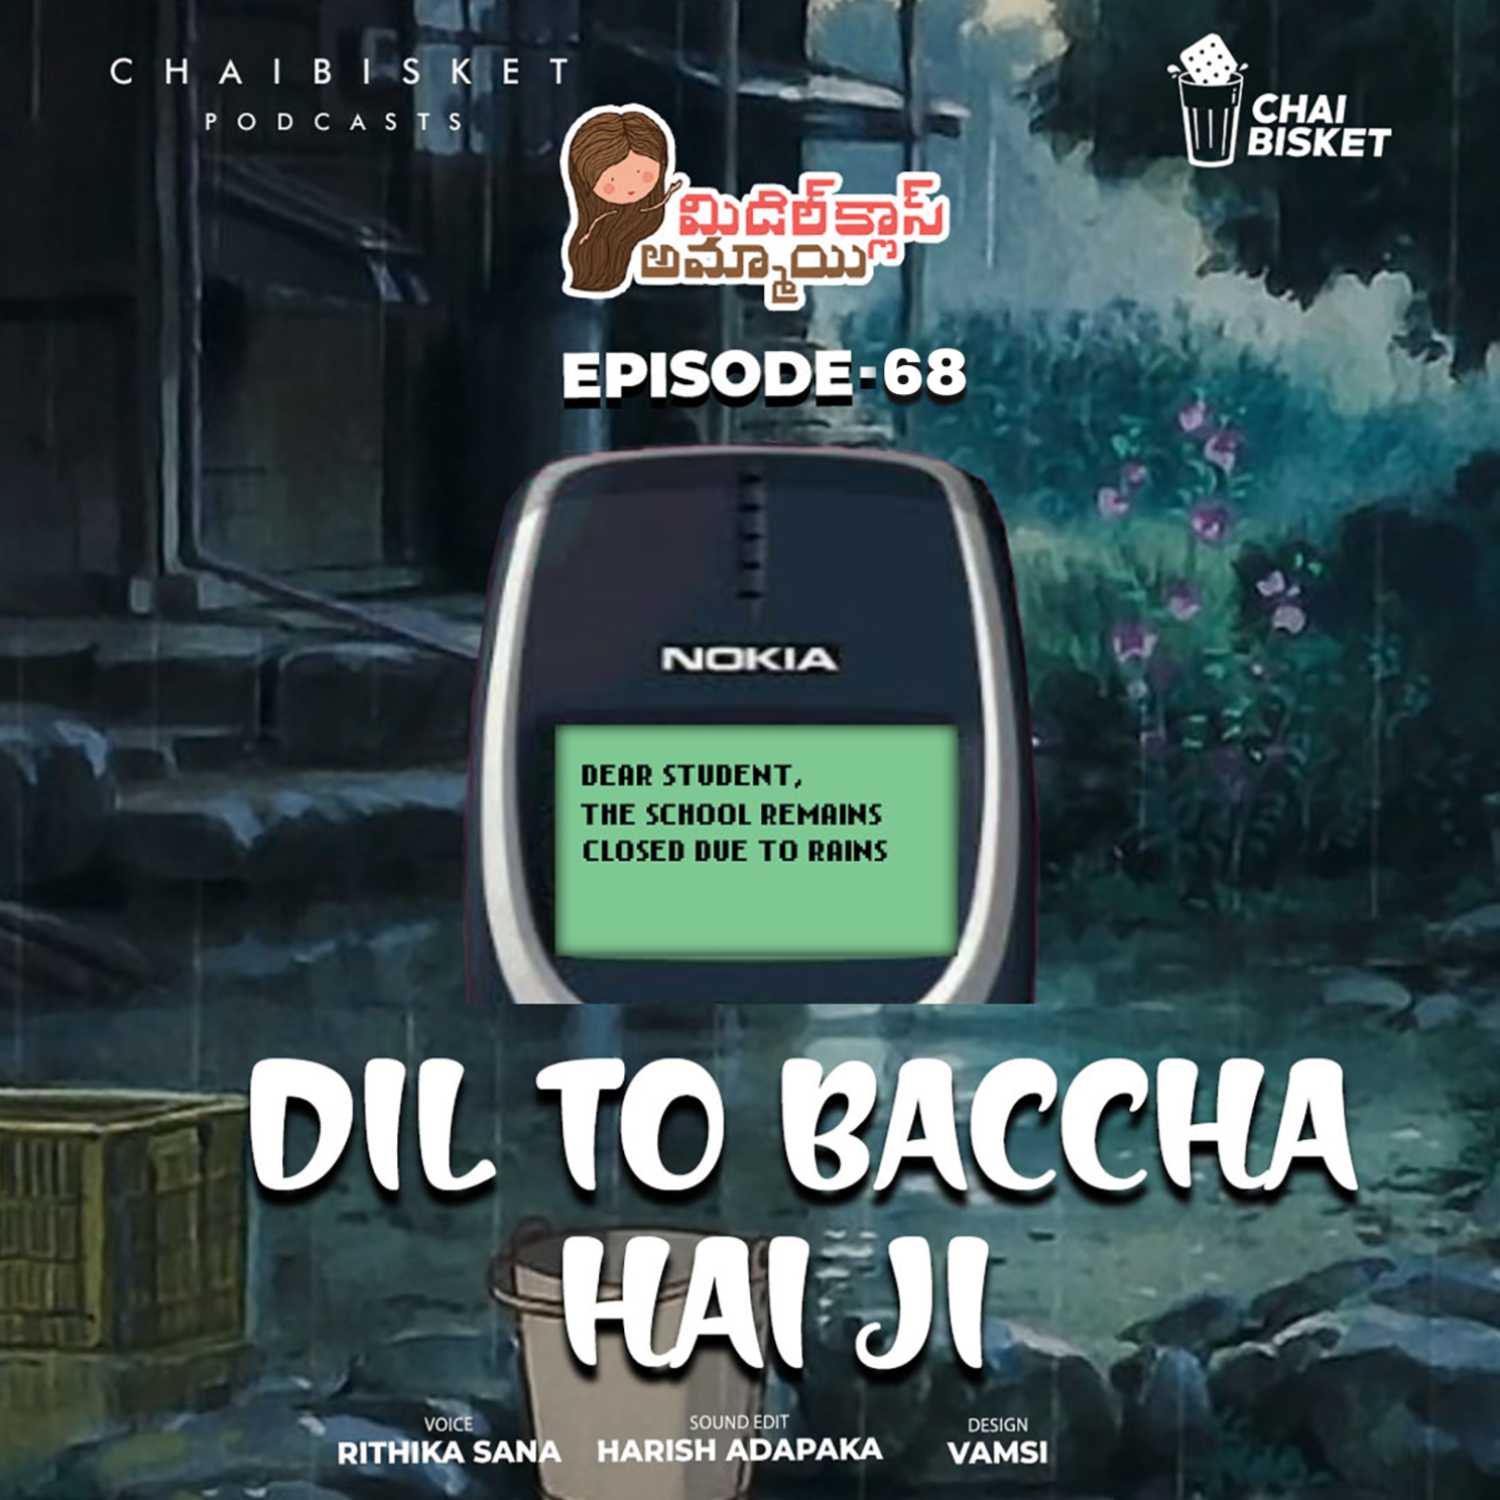 Episode-68: DIL TO BACCHA HAI JI | Middle Class Ammayi | A Telugu Podcast by Rithika Sana